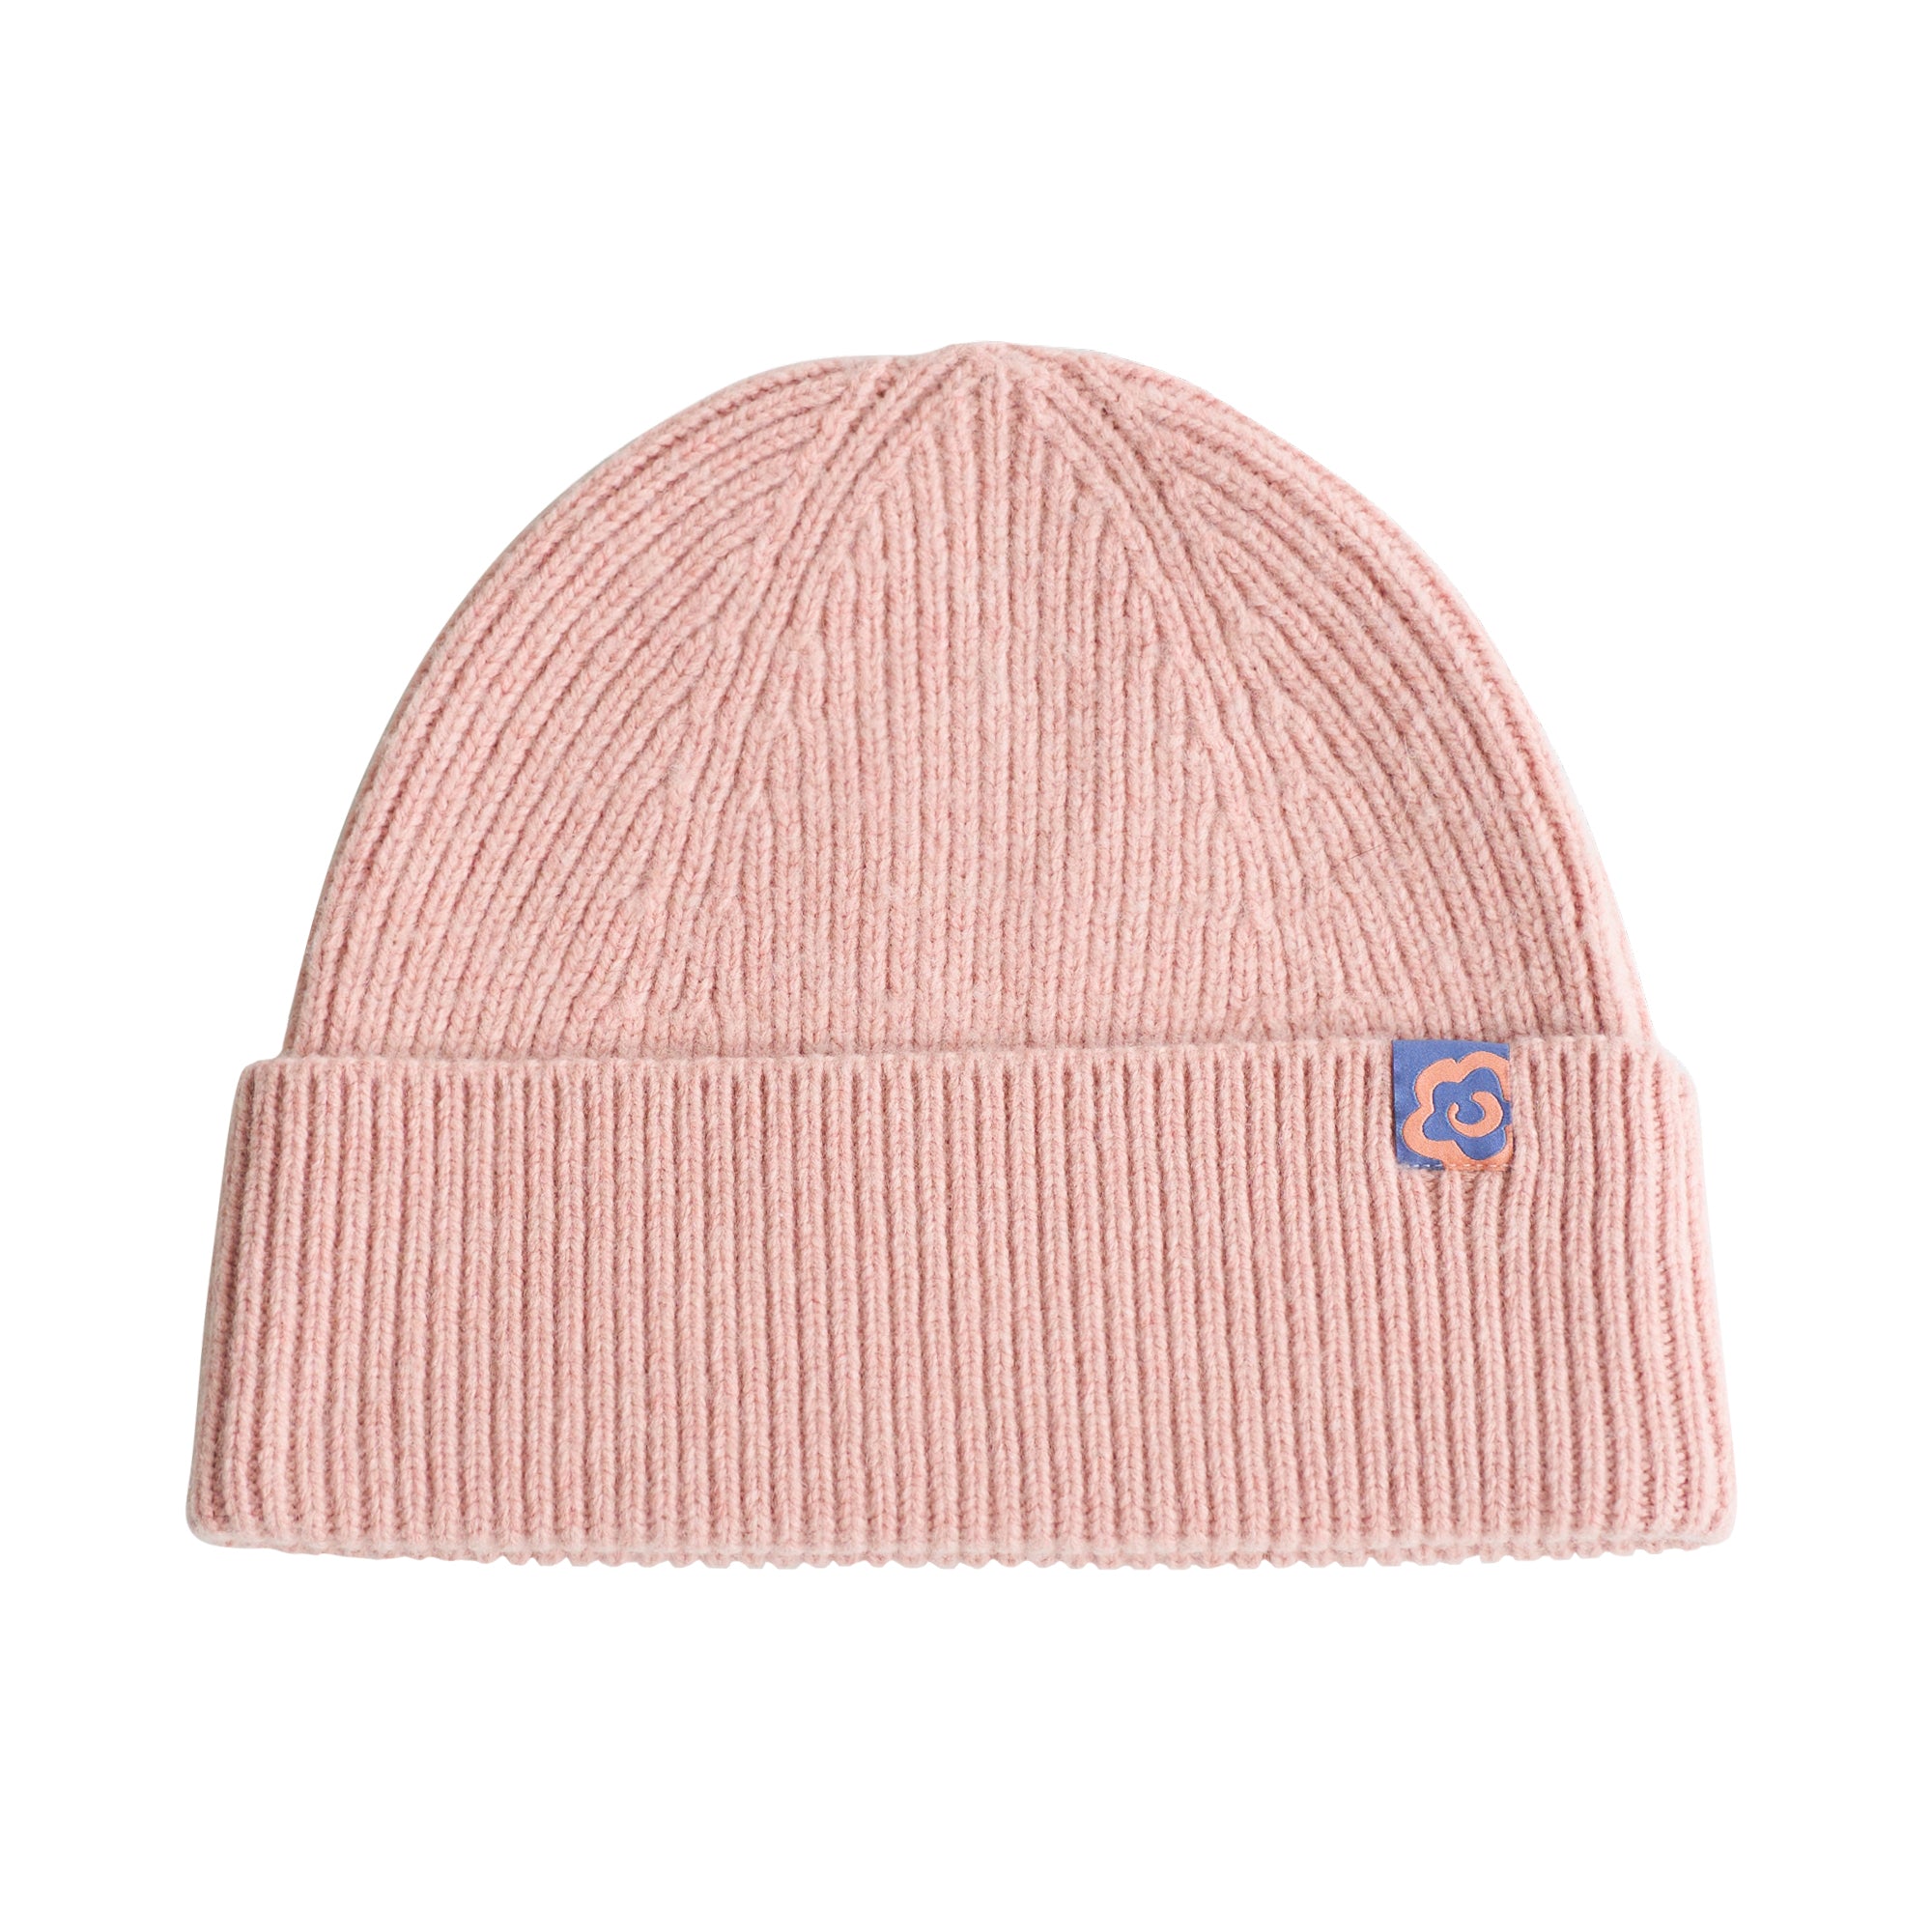 "Extra Fine Marino" Wool Knit Beanie Hat - Pale Pink